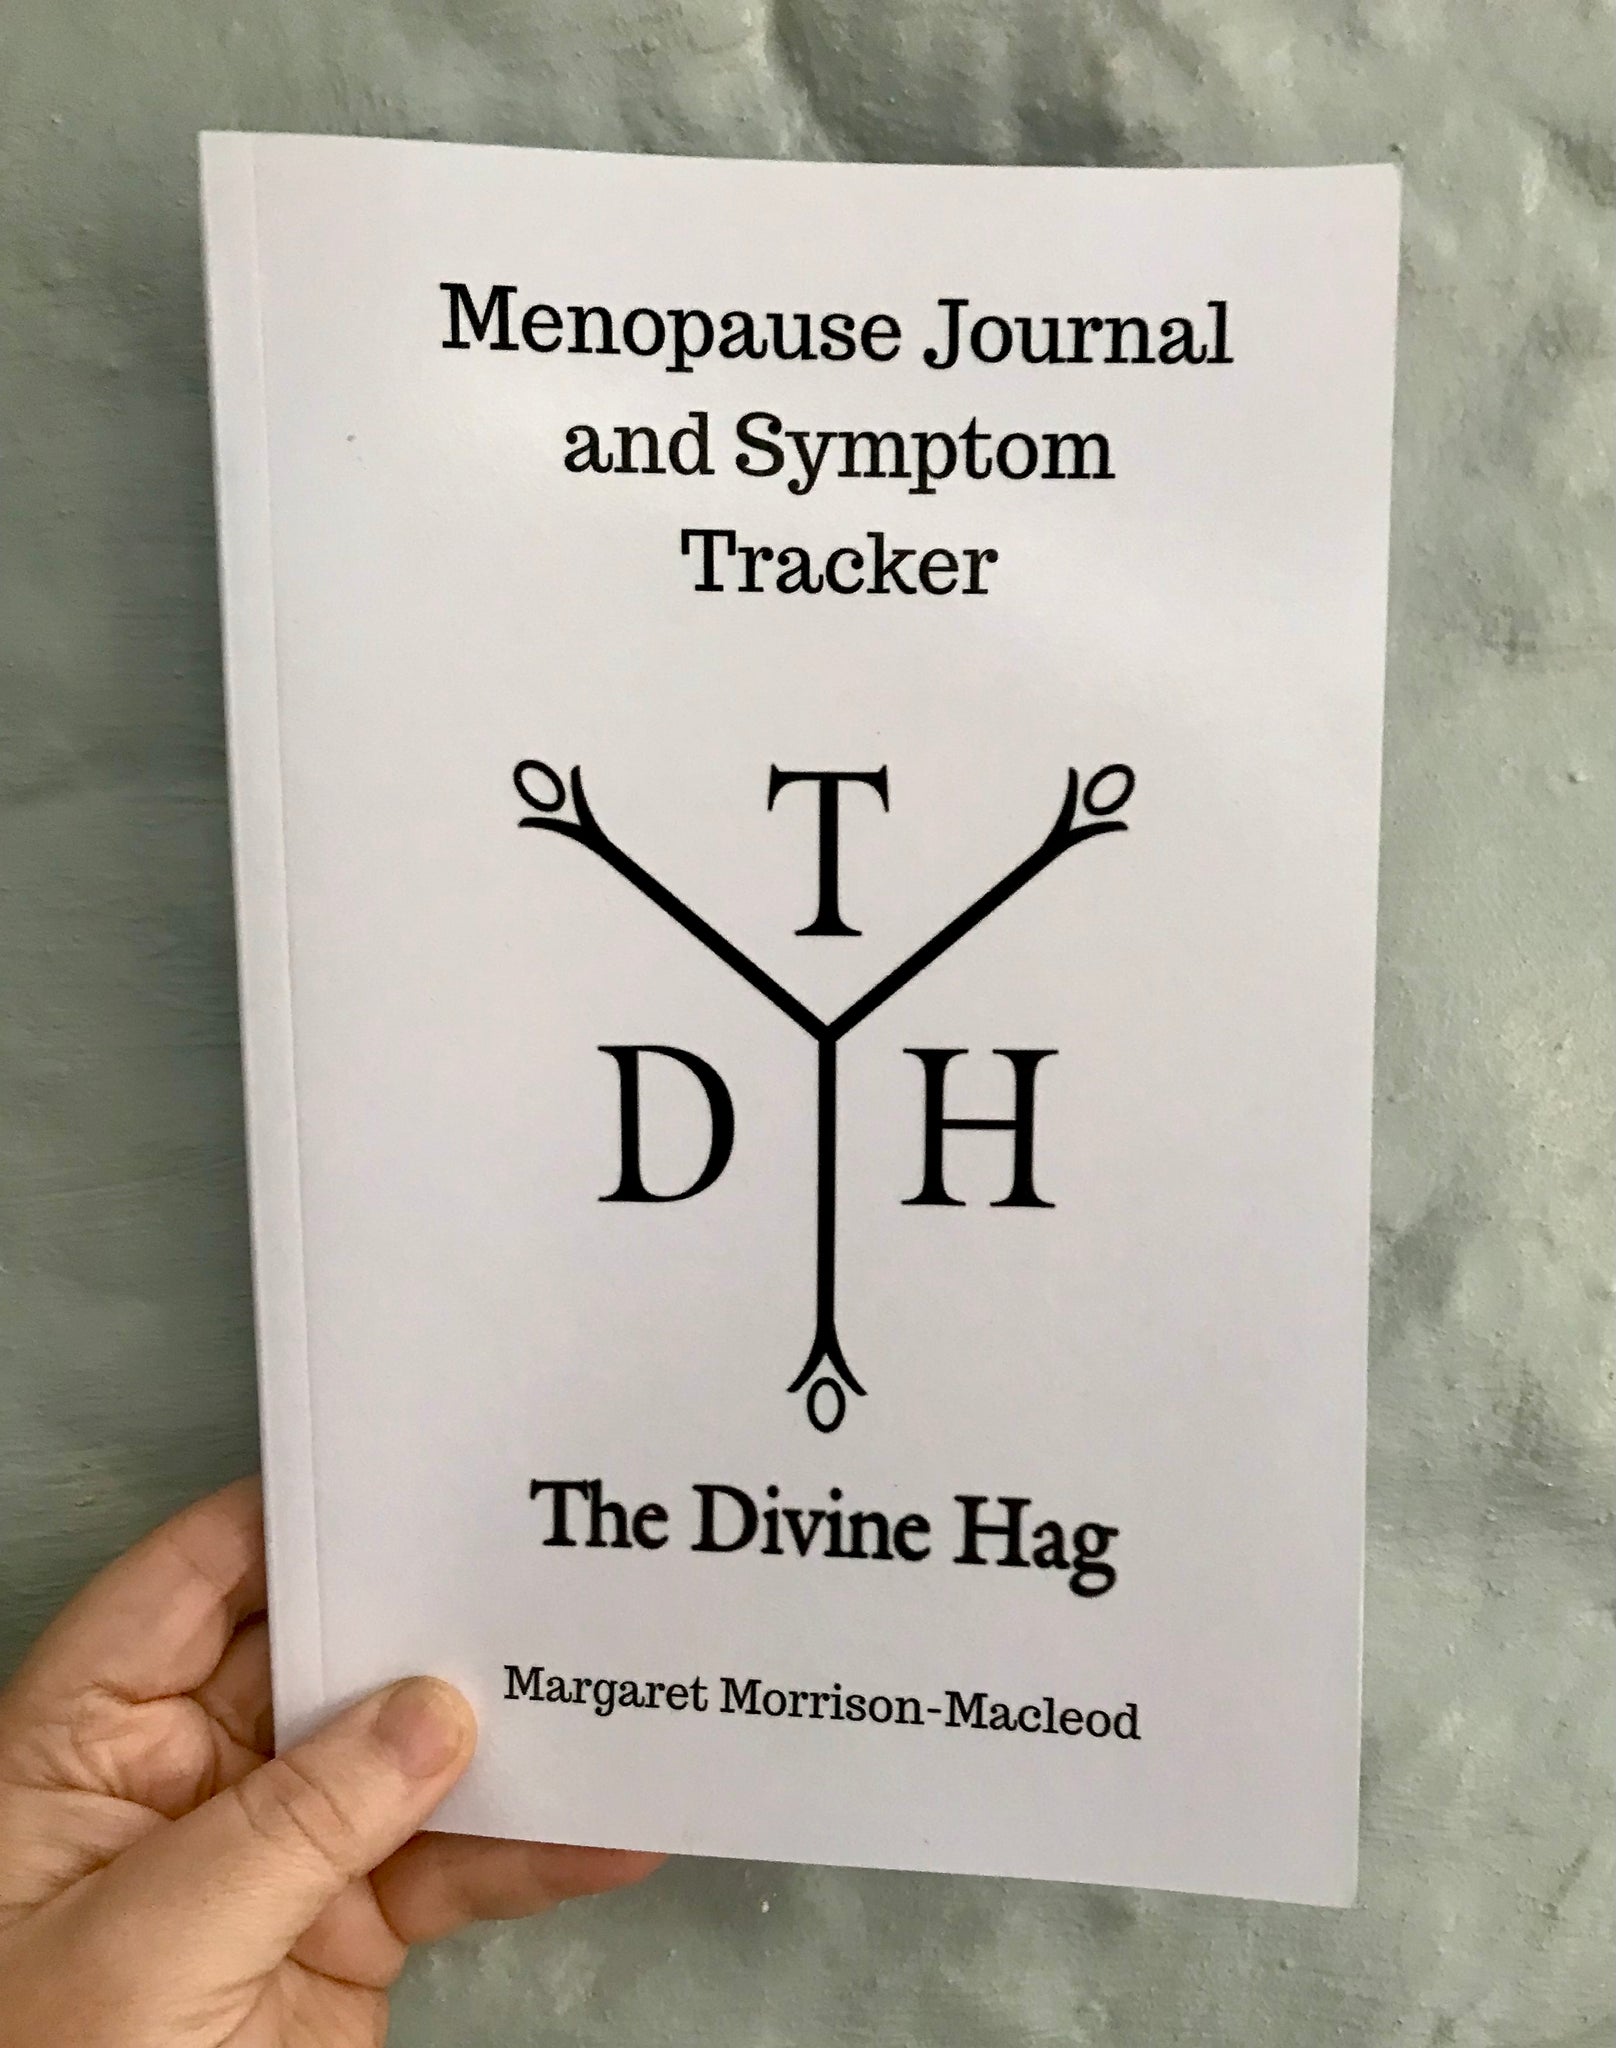 Menopause Journal and Symptom Tracker